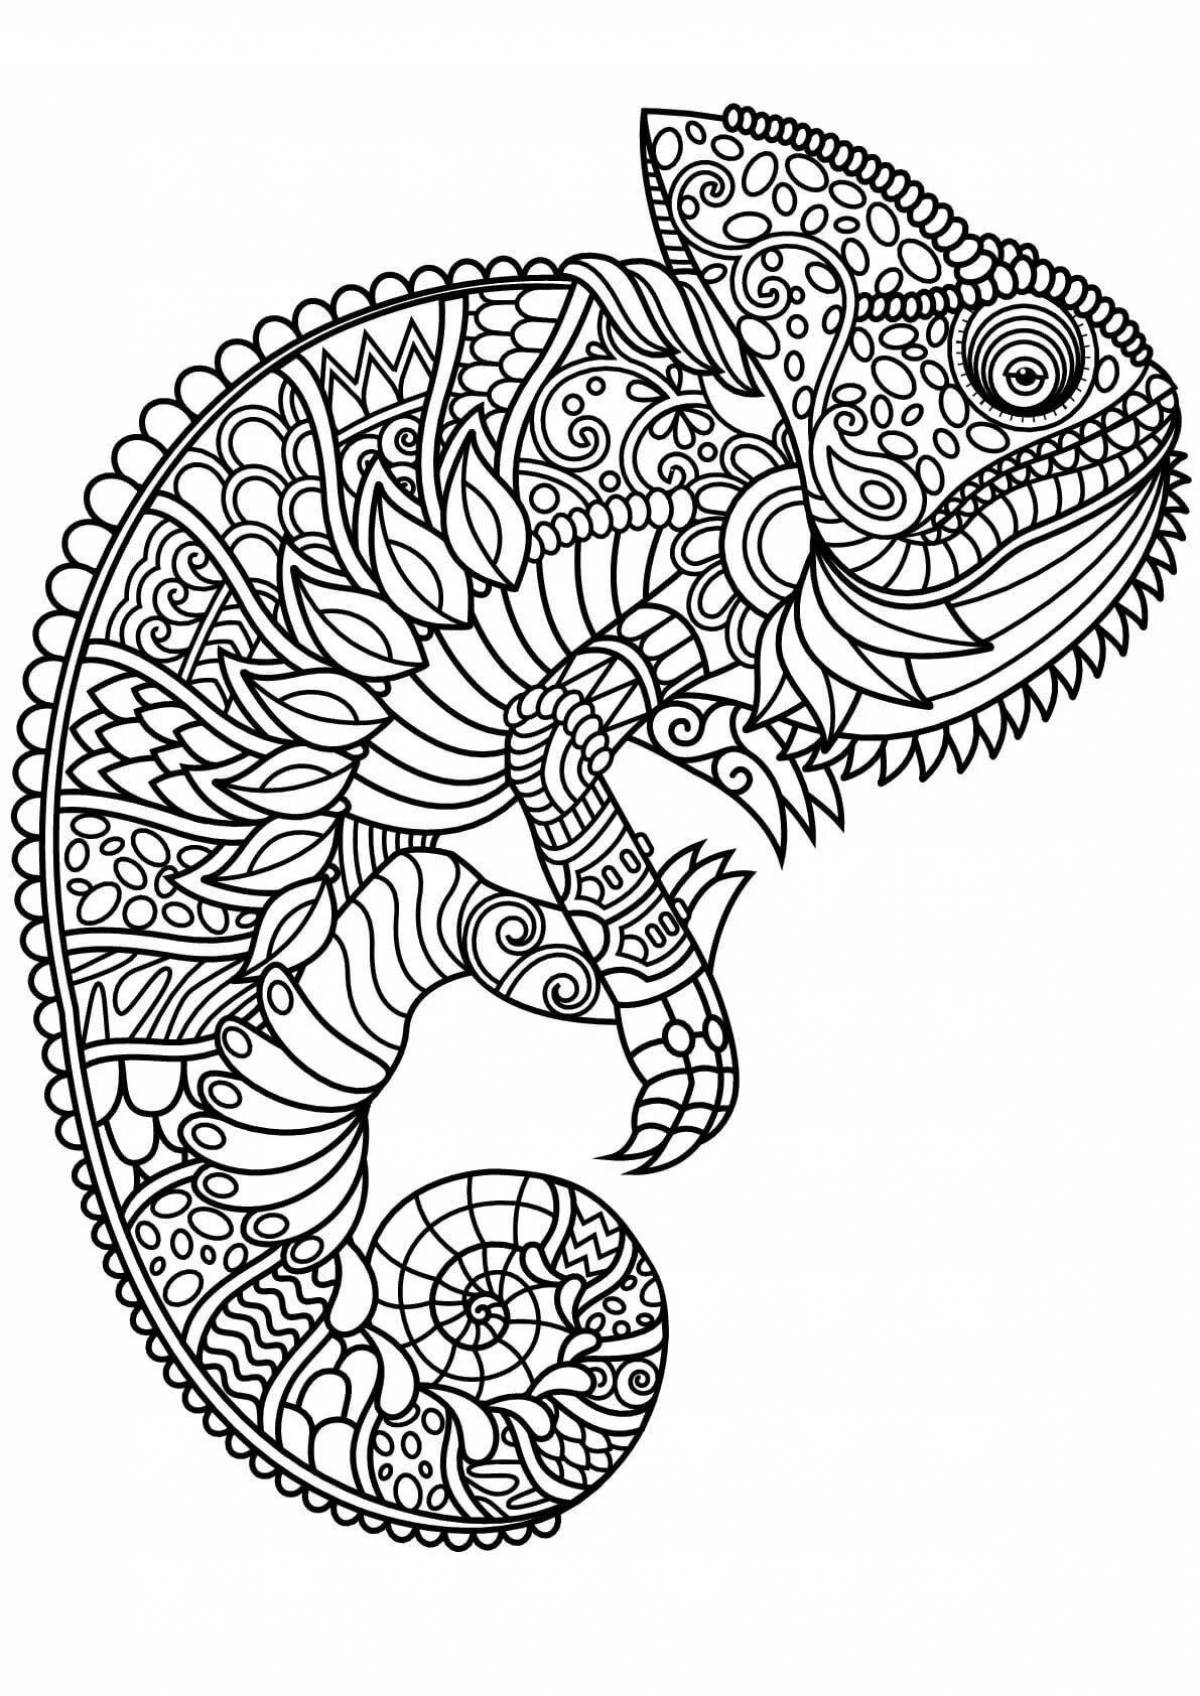 Serene coloring page antistress chameleon